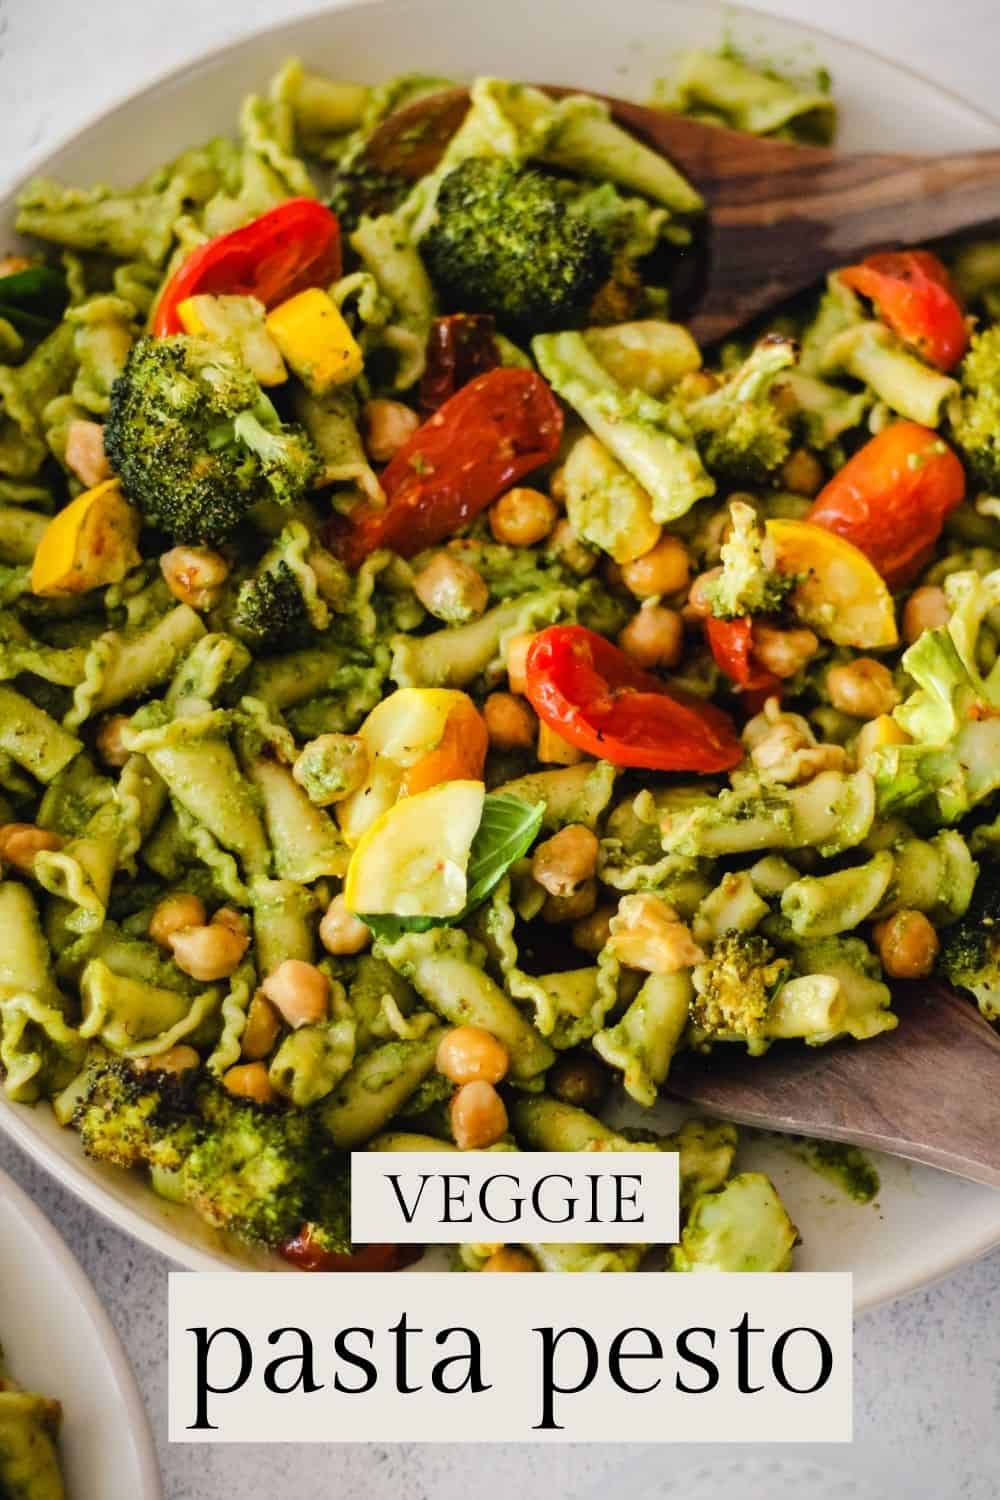 Pesto pasta with chickpeas, tomatoes, broccoli, and yellow squash. Text overlay reads, "Veggie Pasta Pesto."